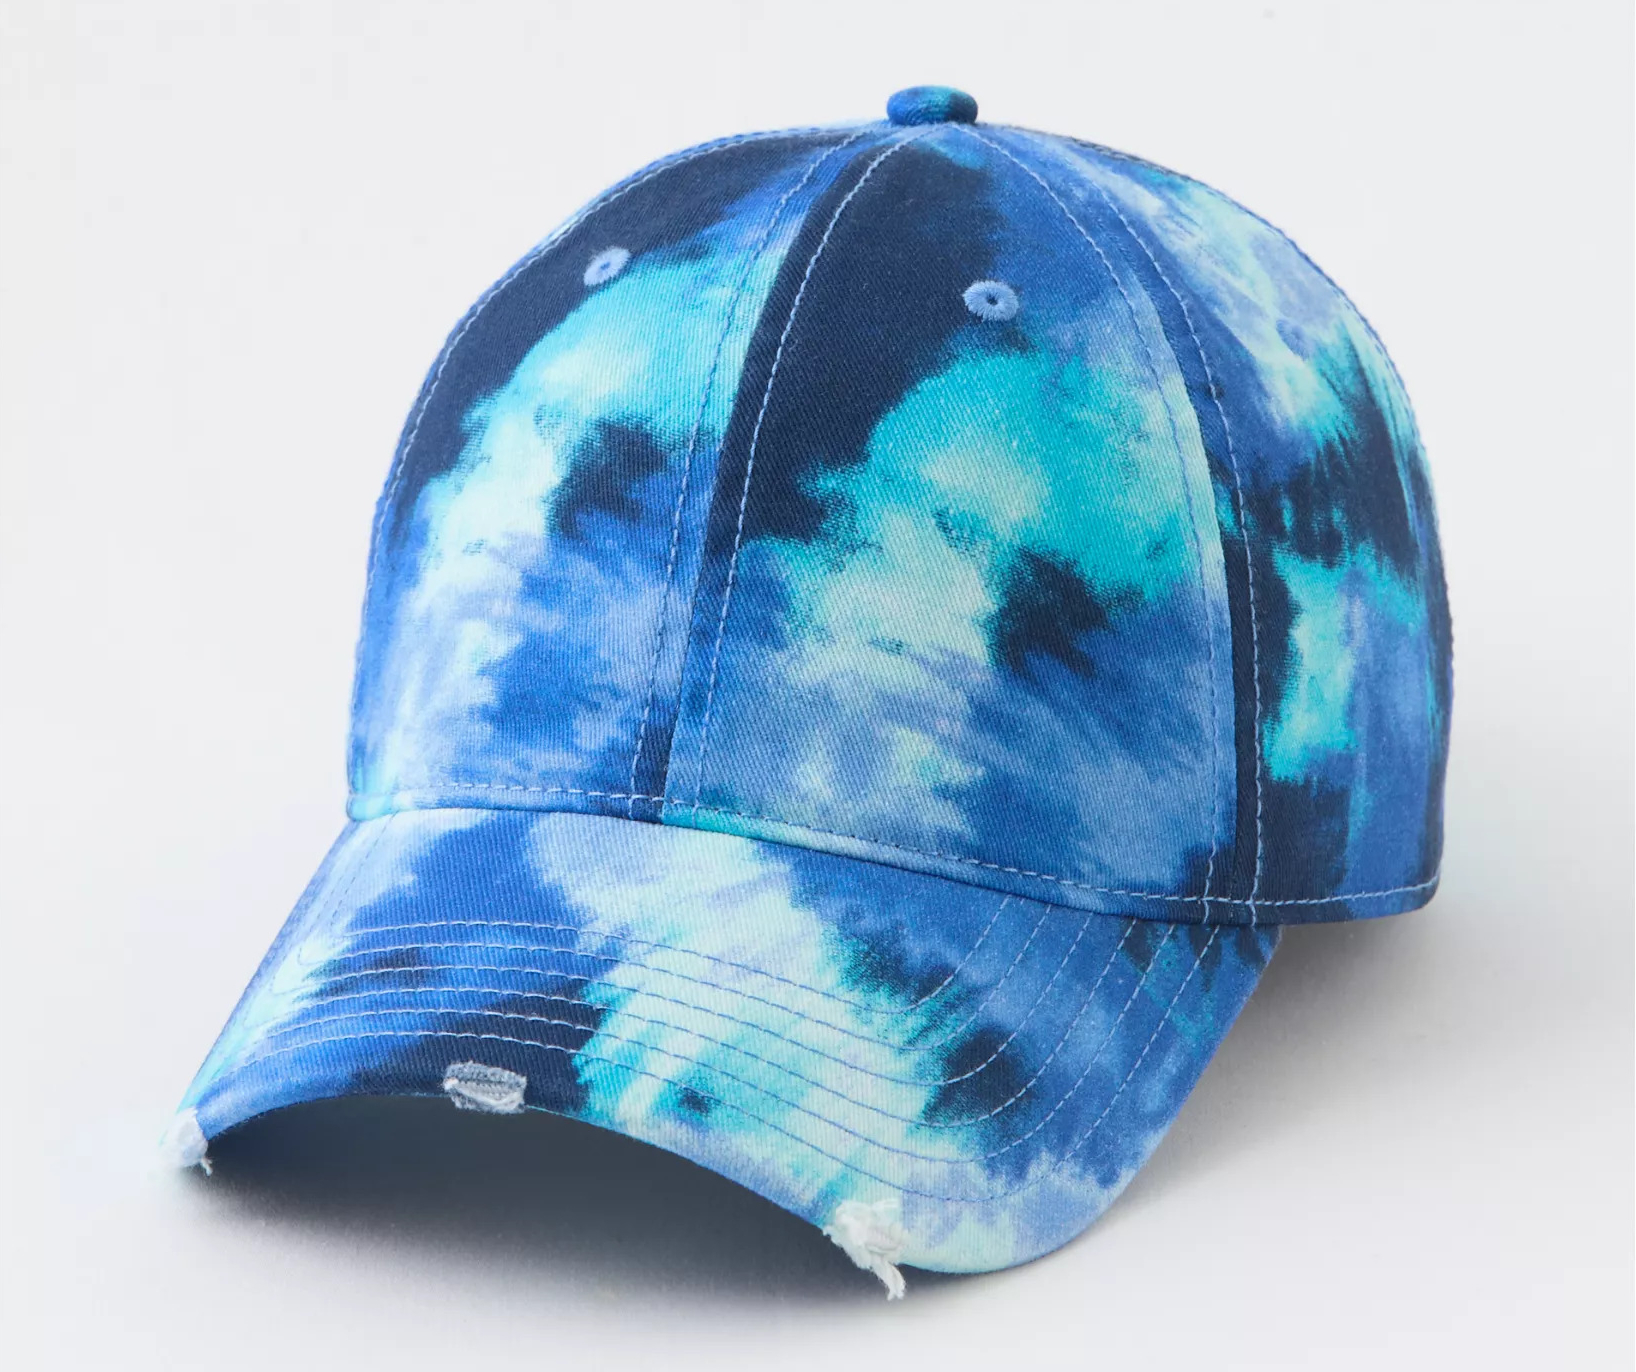 The tidal blue hat